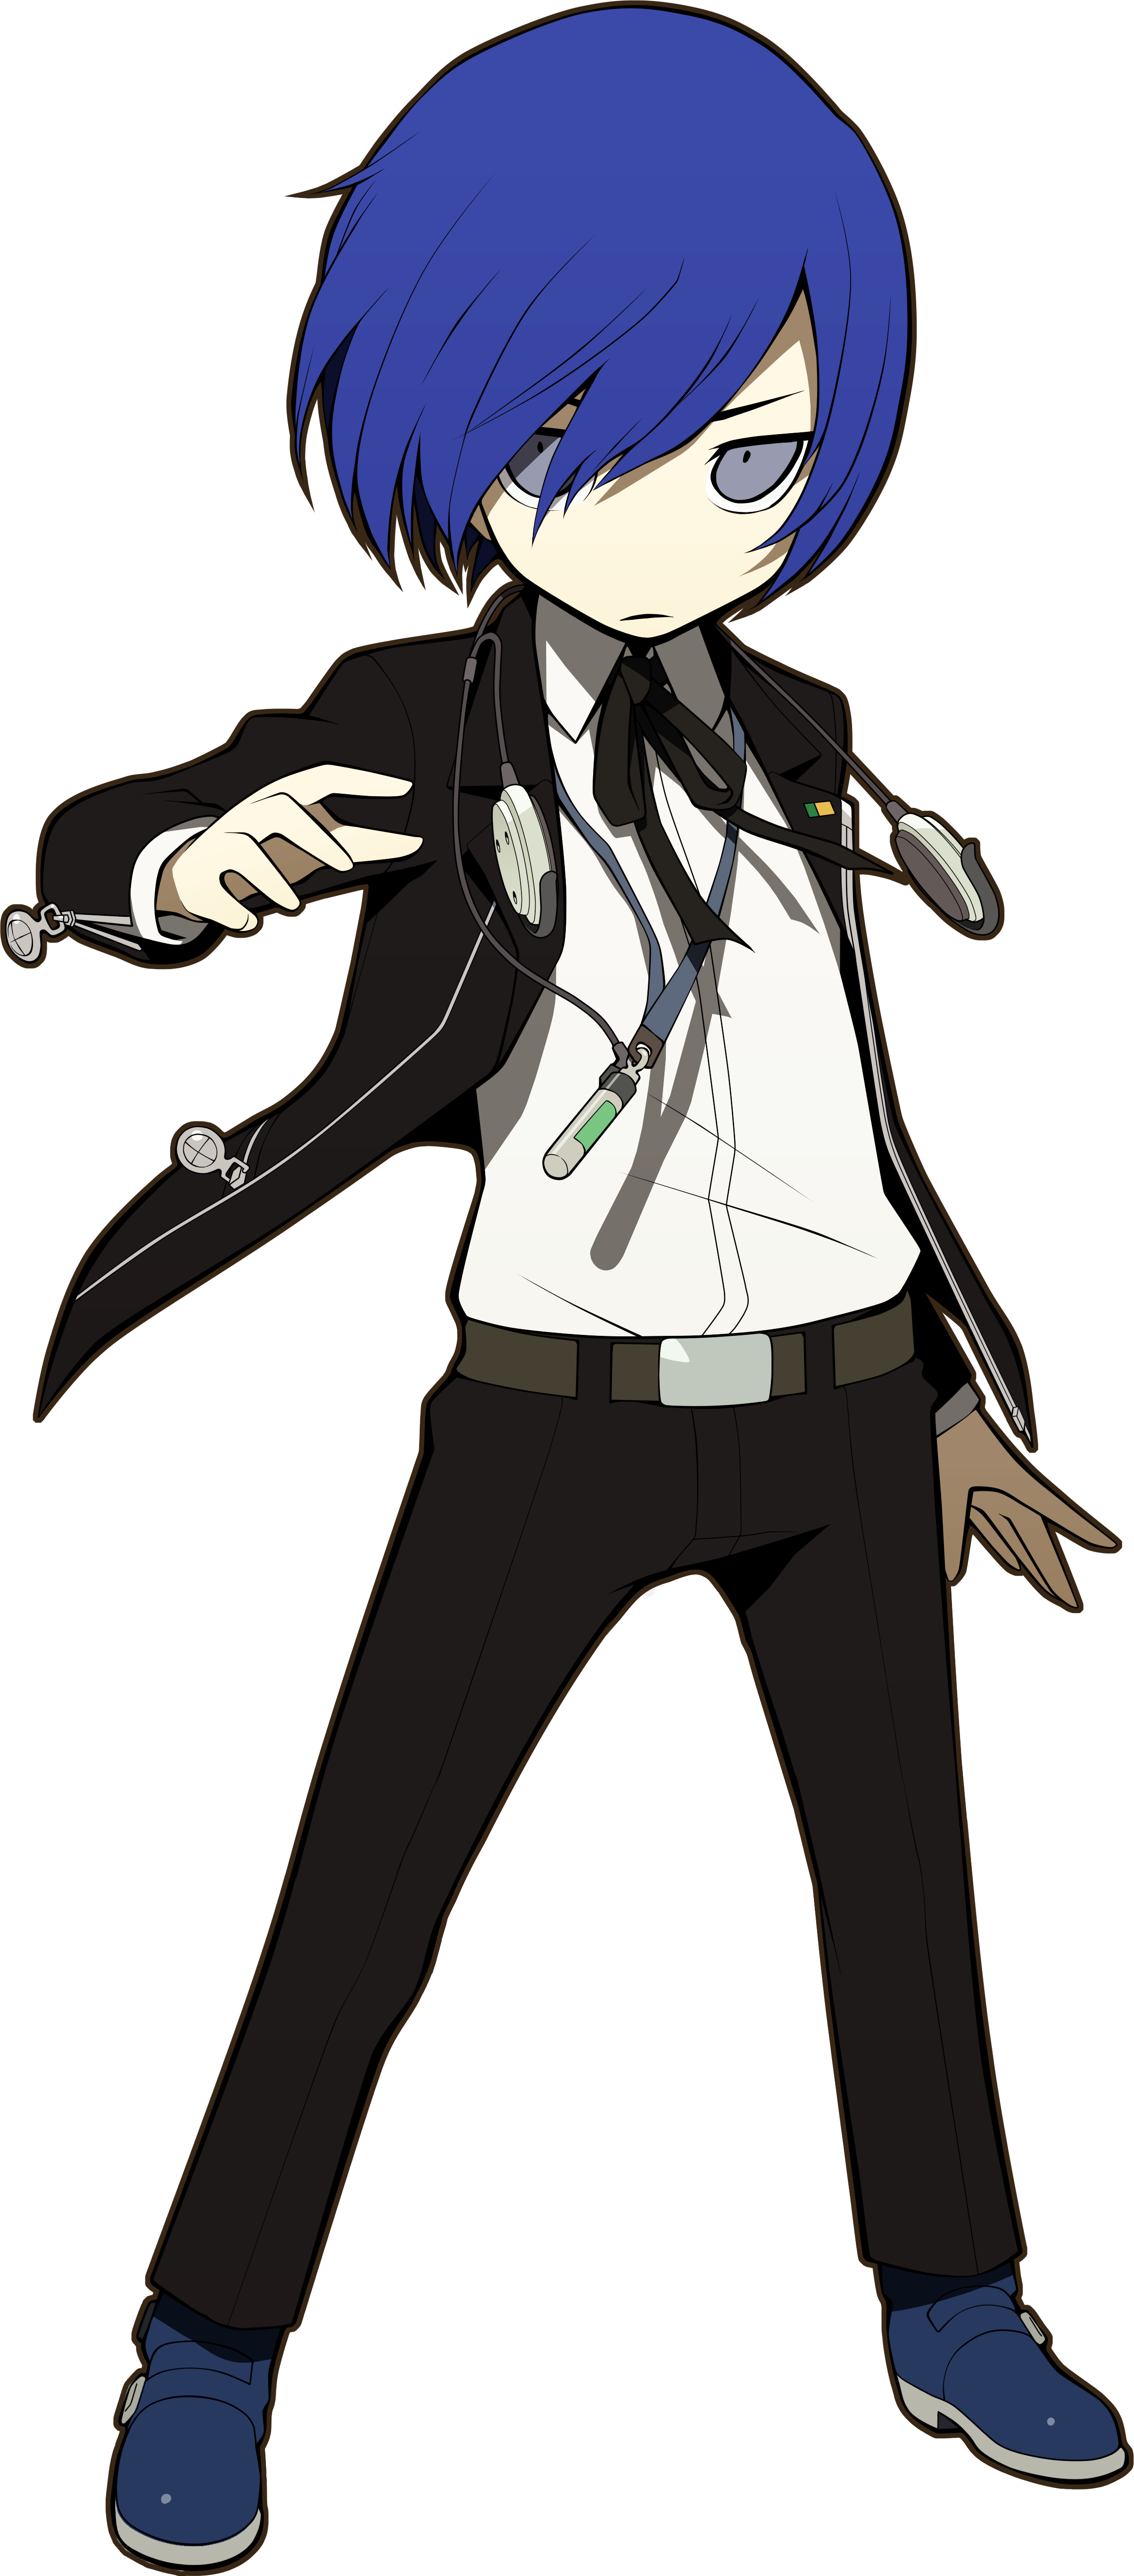 Characters of Persona 3 - Wikipedia